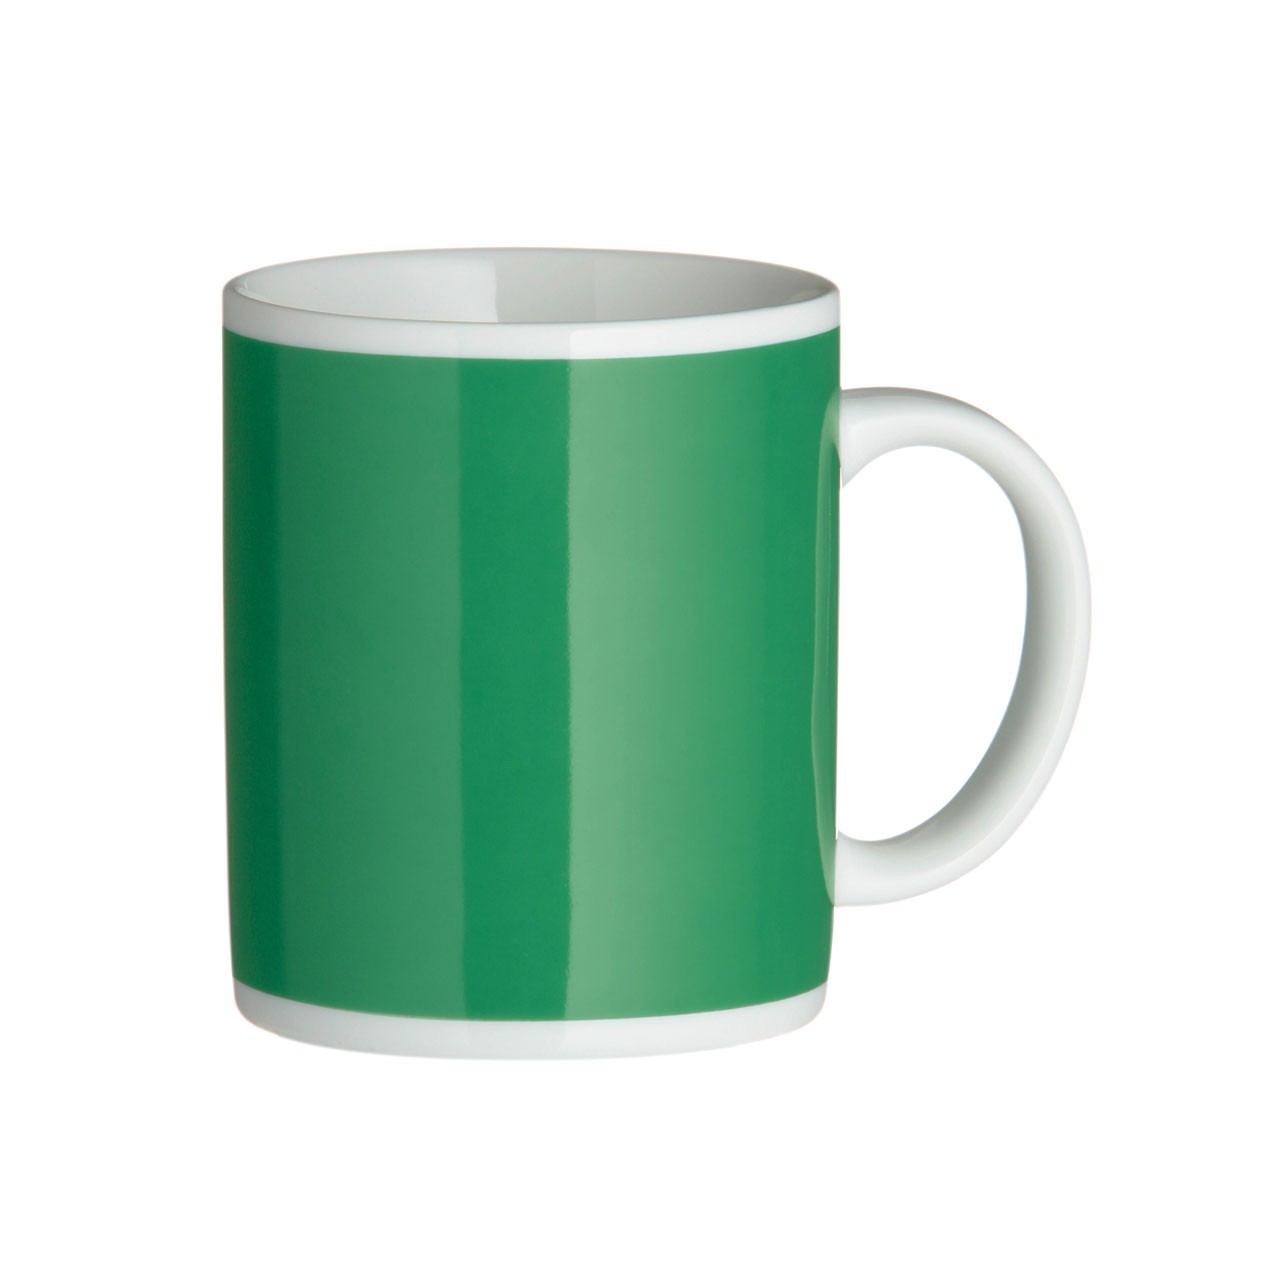 Straight Sided Porcelain Mug, 11 oz - Green